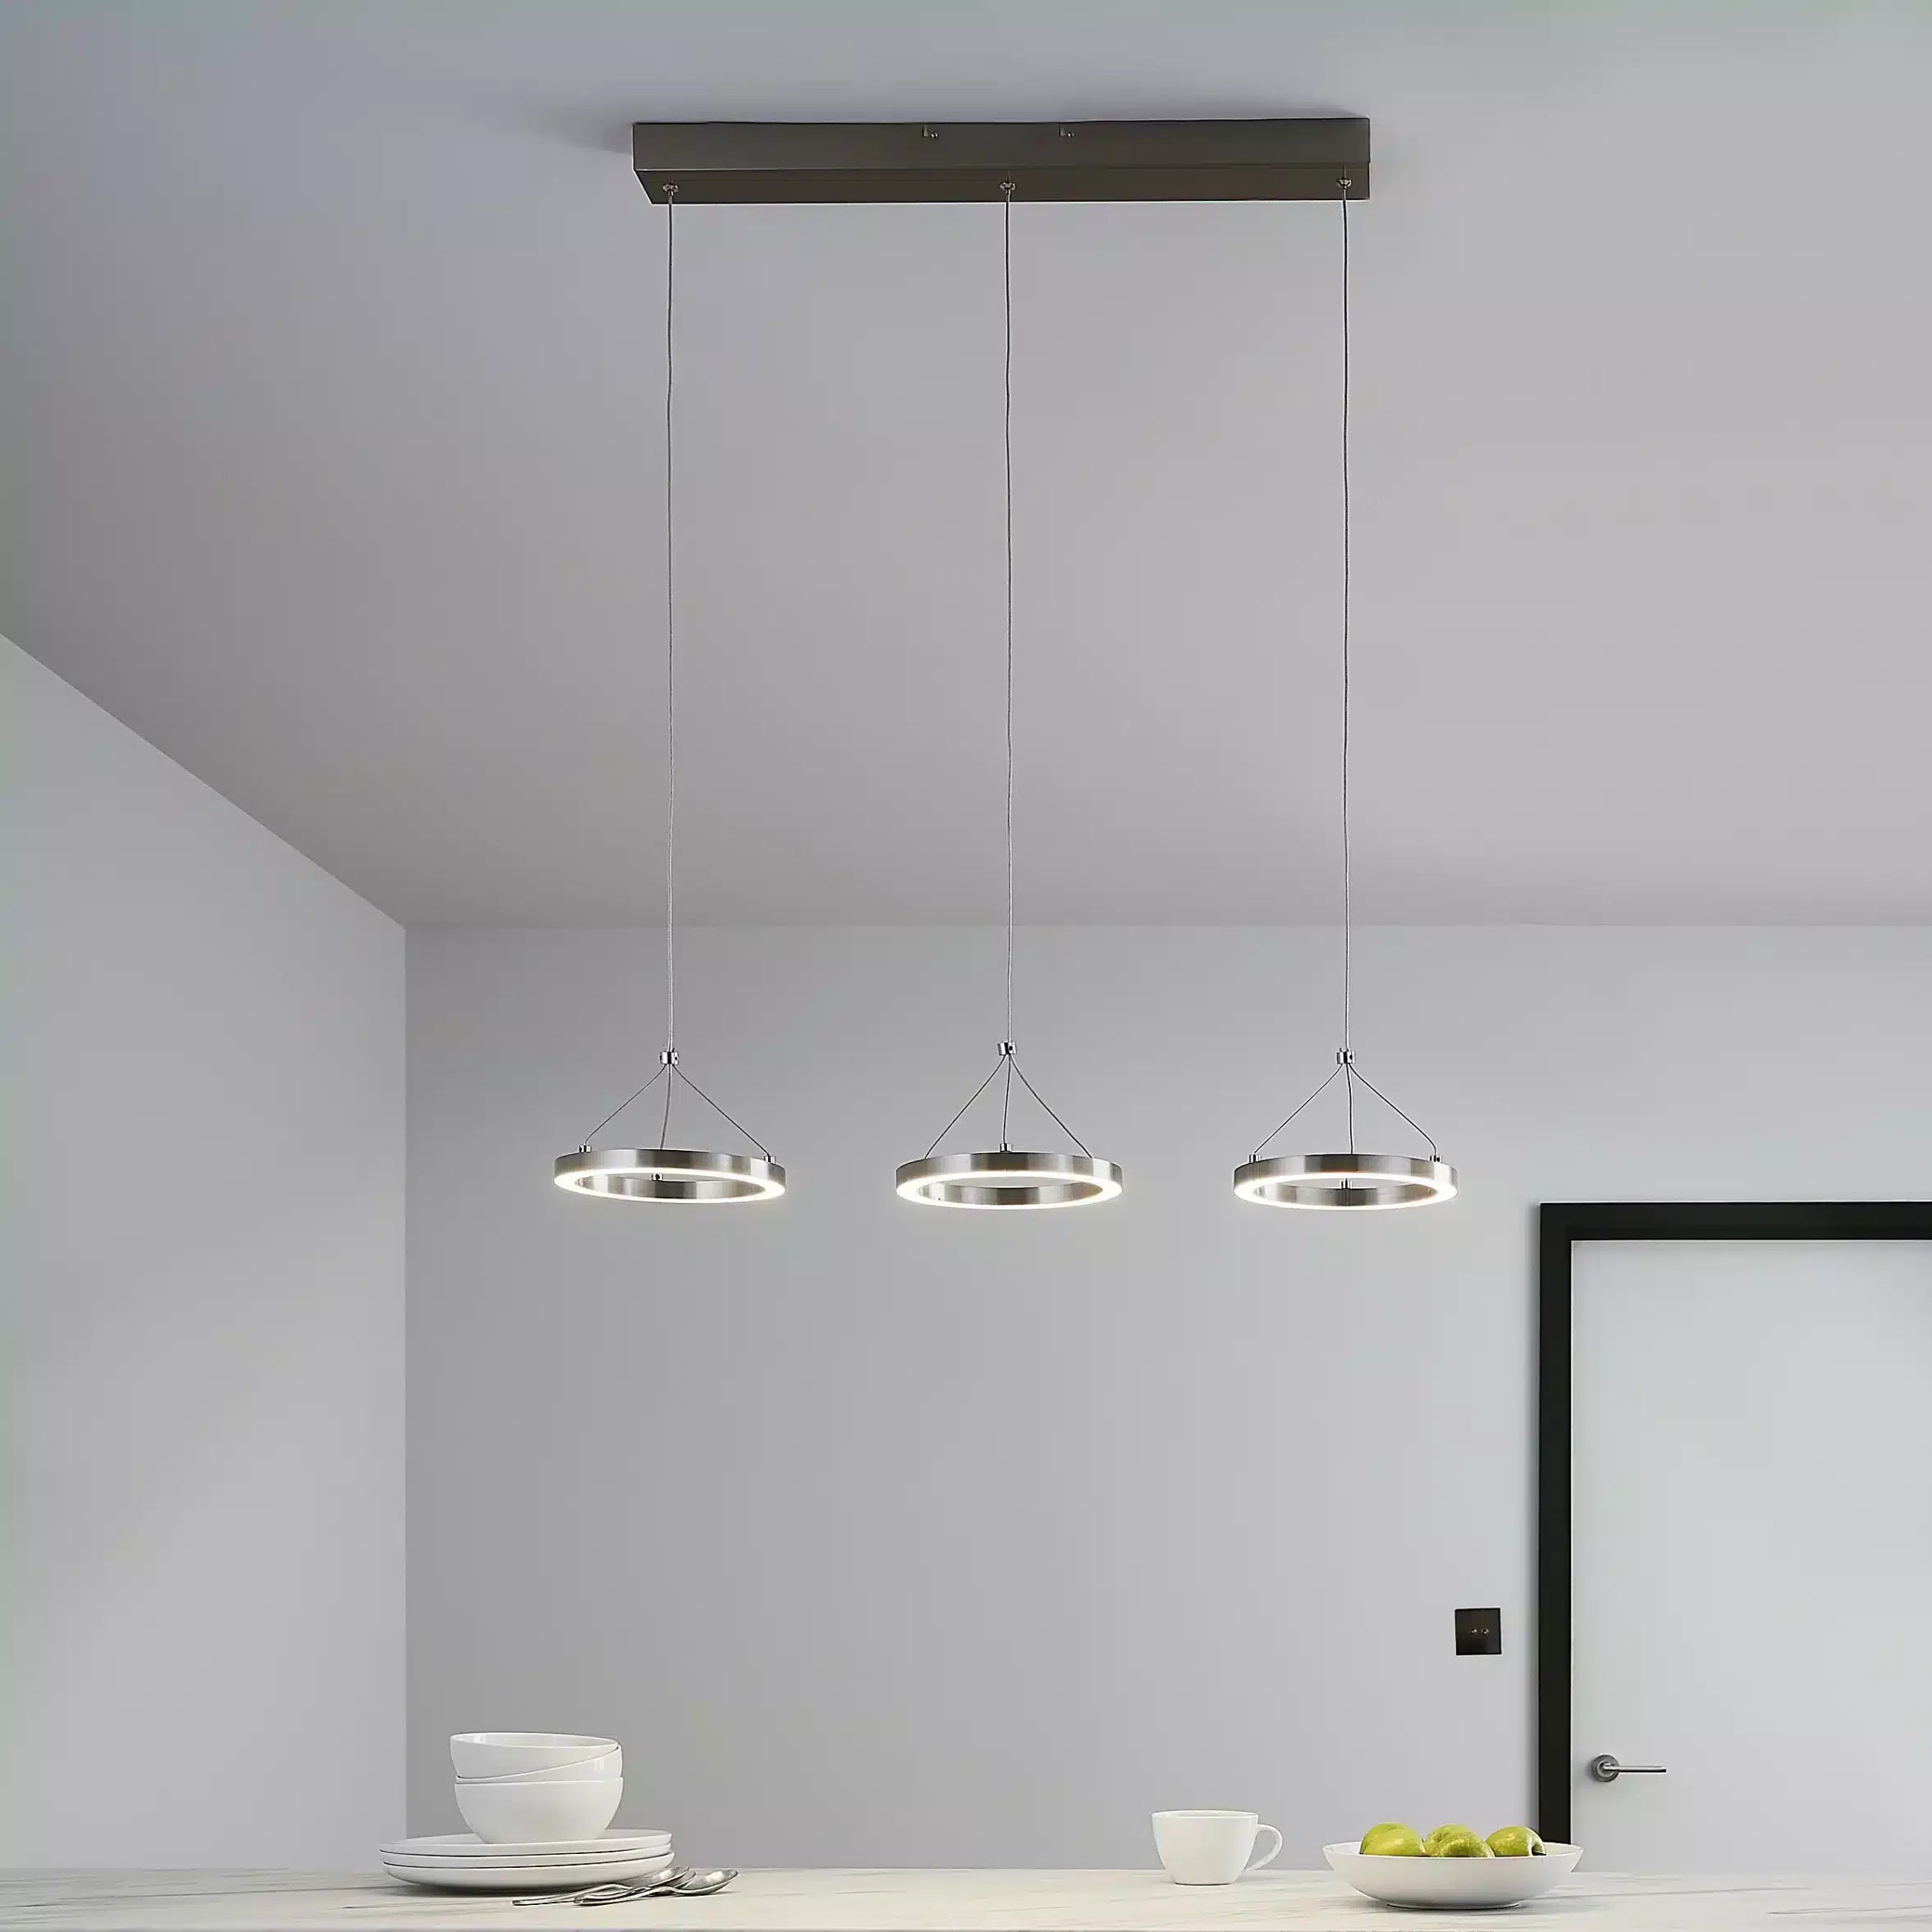 GoodHome Taphao Chrome effect 3 Lamp Pendant ceiling light-4083